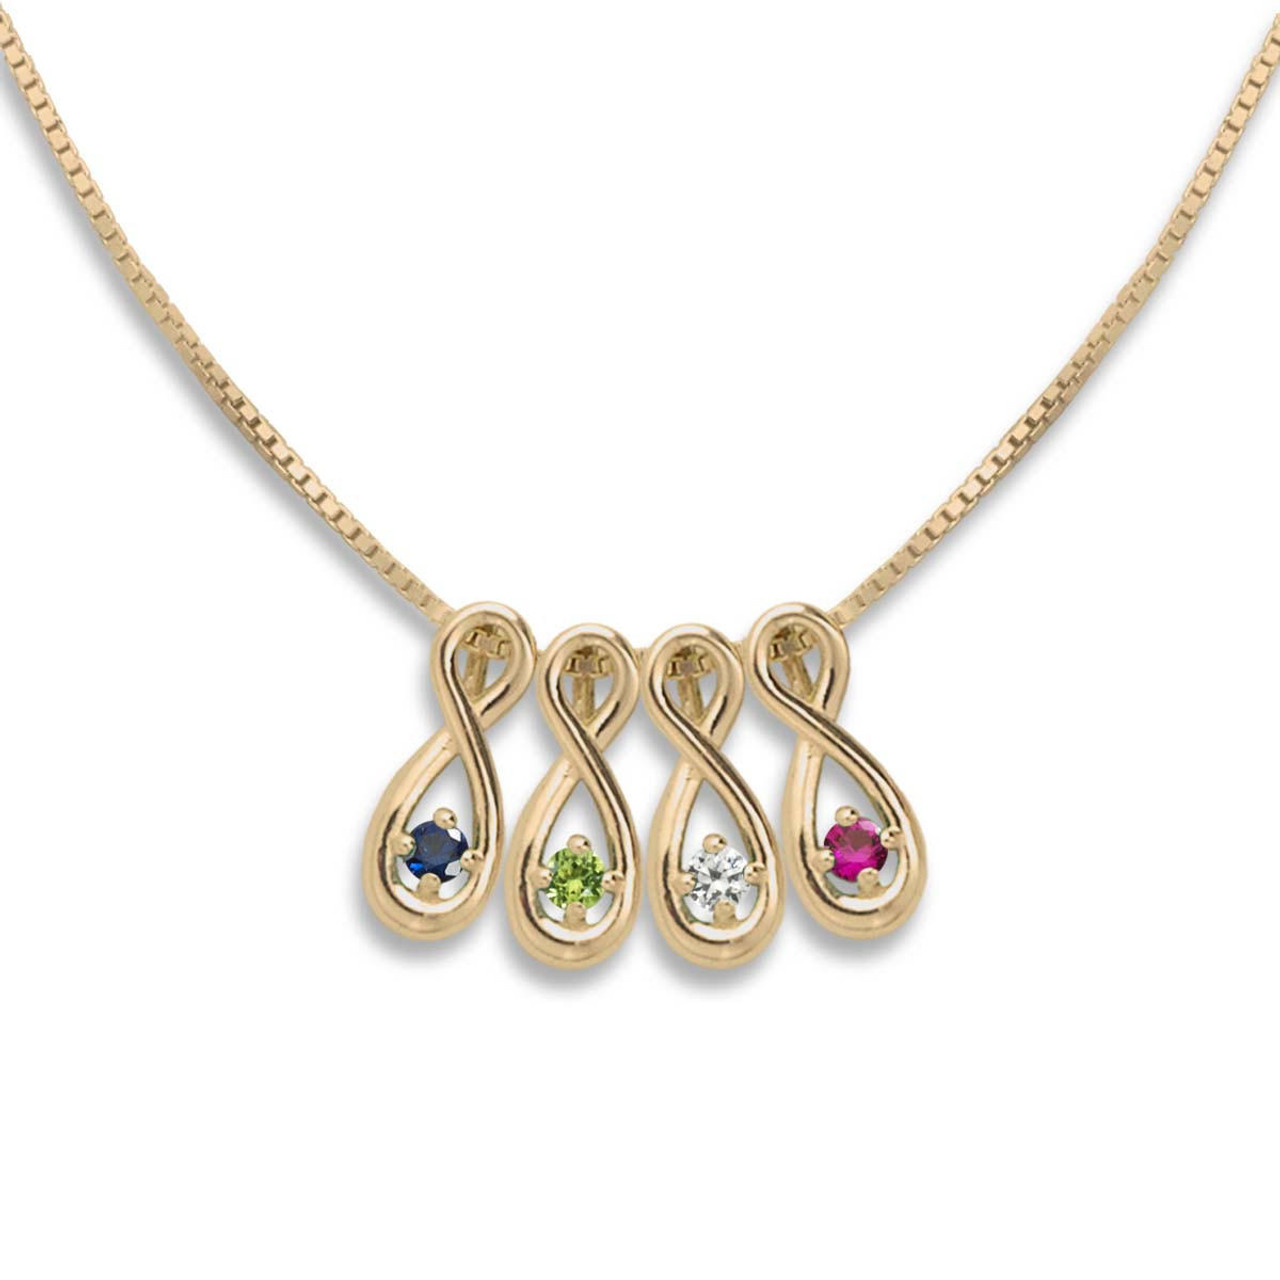 jhbreakell 14k gold infinity family necklace 4 stone 82519.1663967616